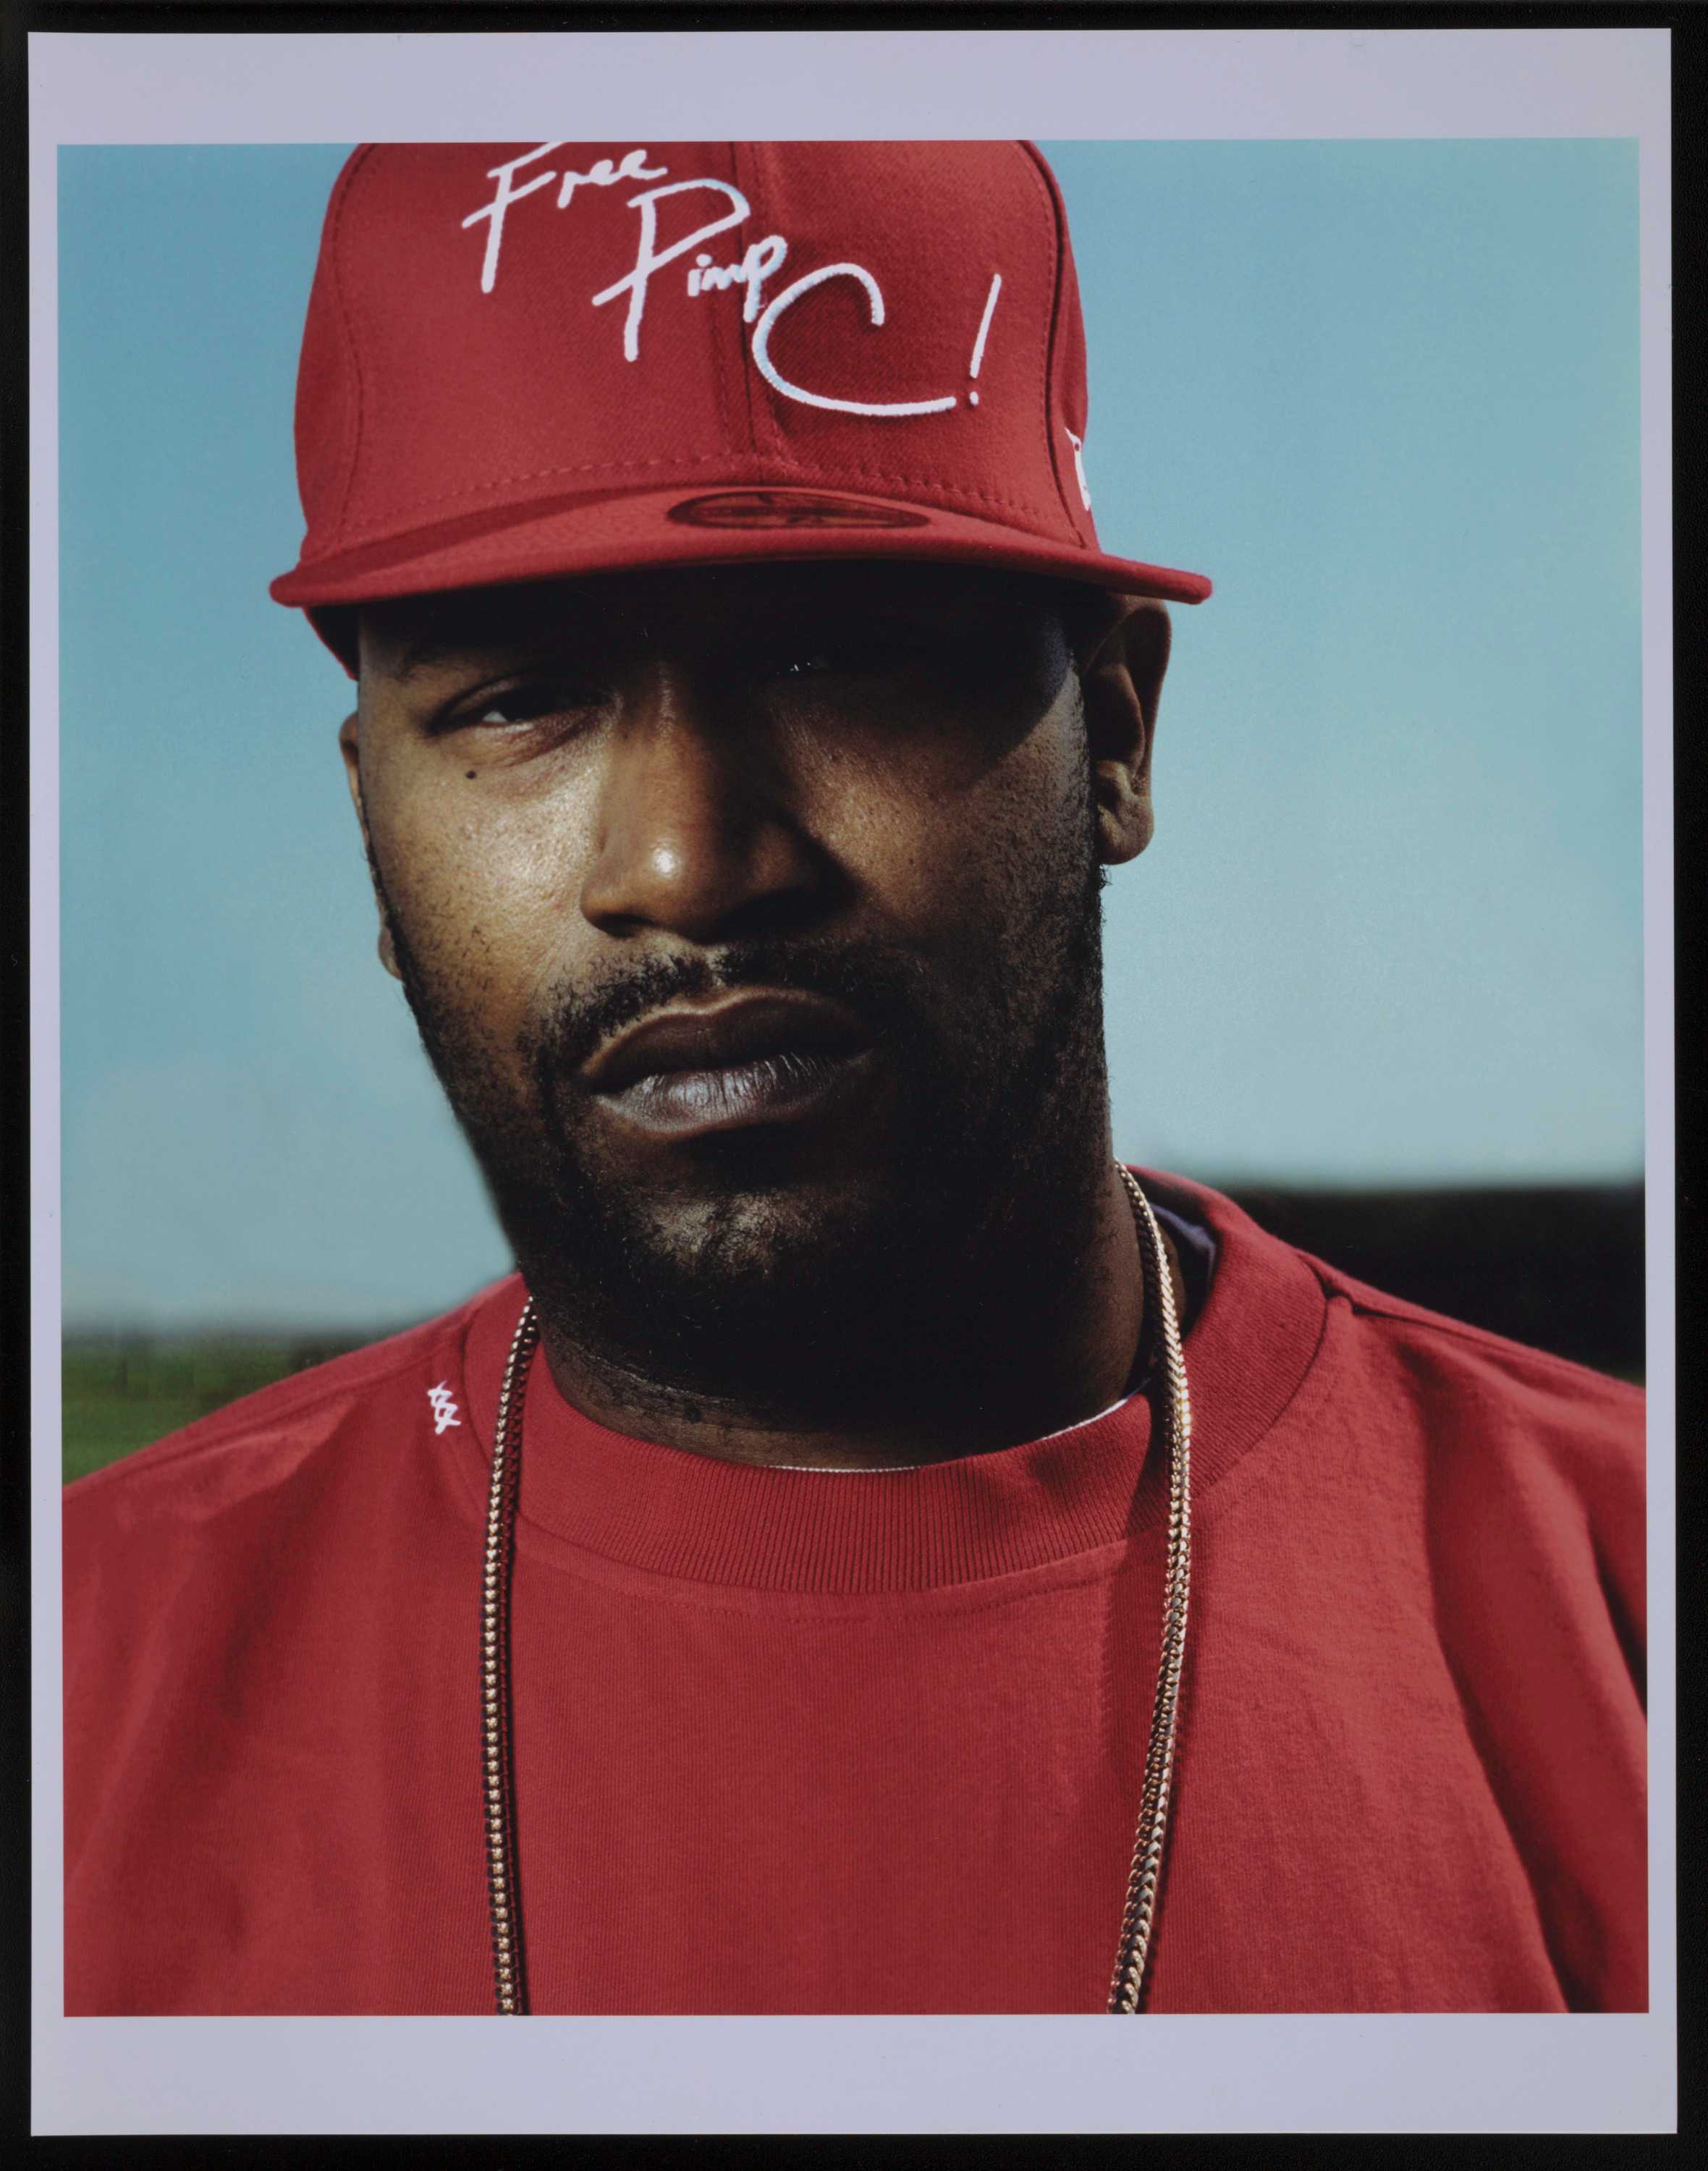 Headshot of man wearing red shirt and baseball cap